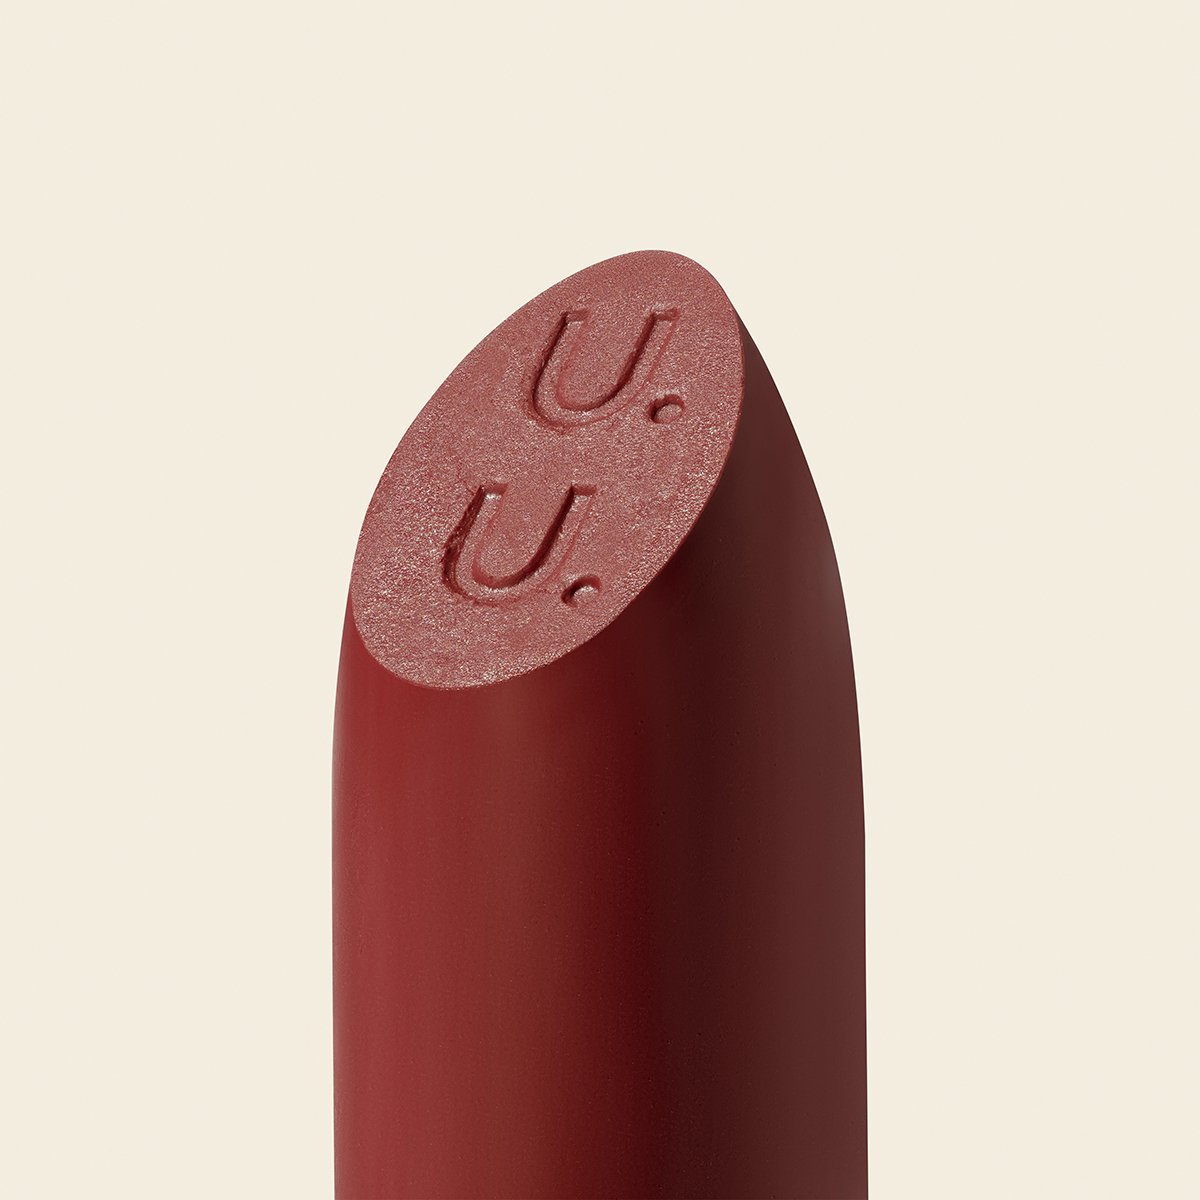 Uoga Uoga Nourishing Sheer Natural Lipstick, Charmberry 4 g